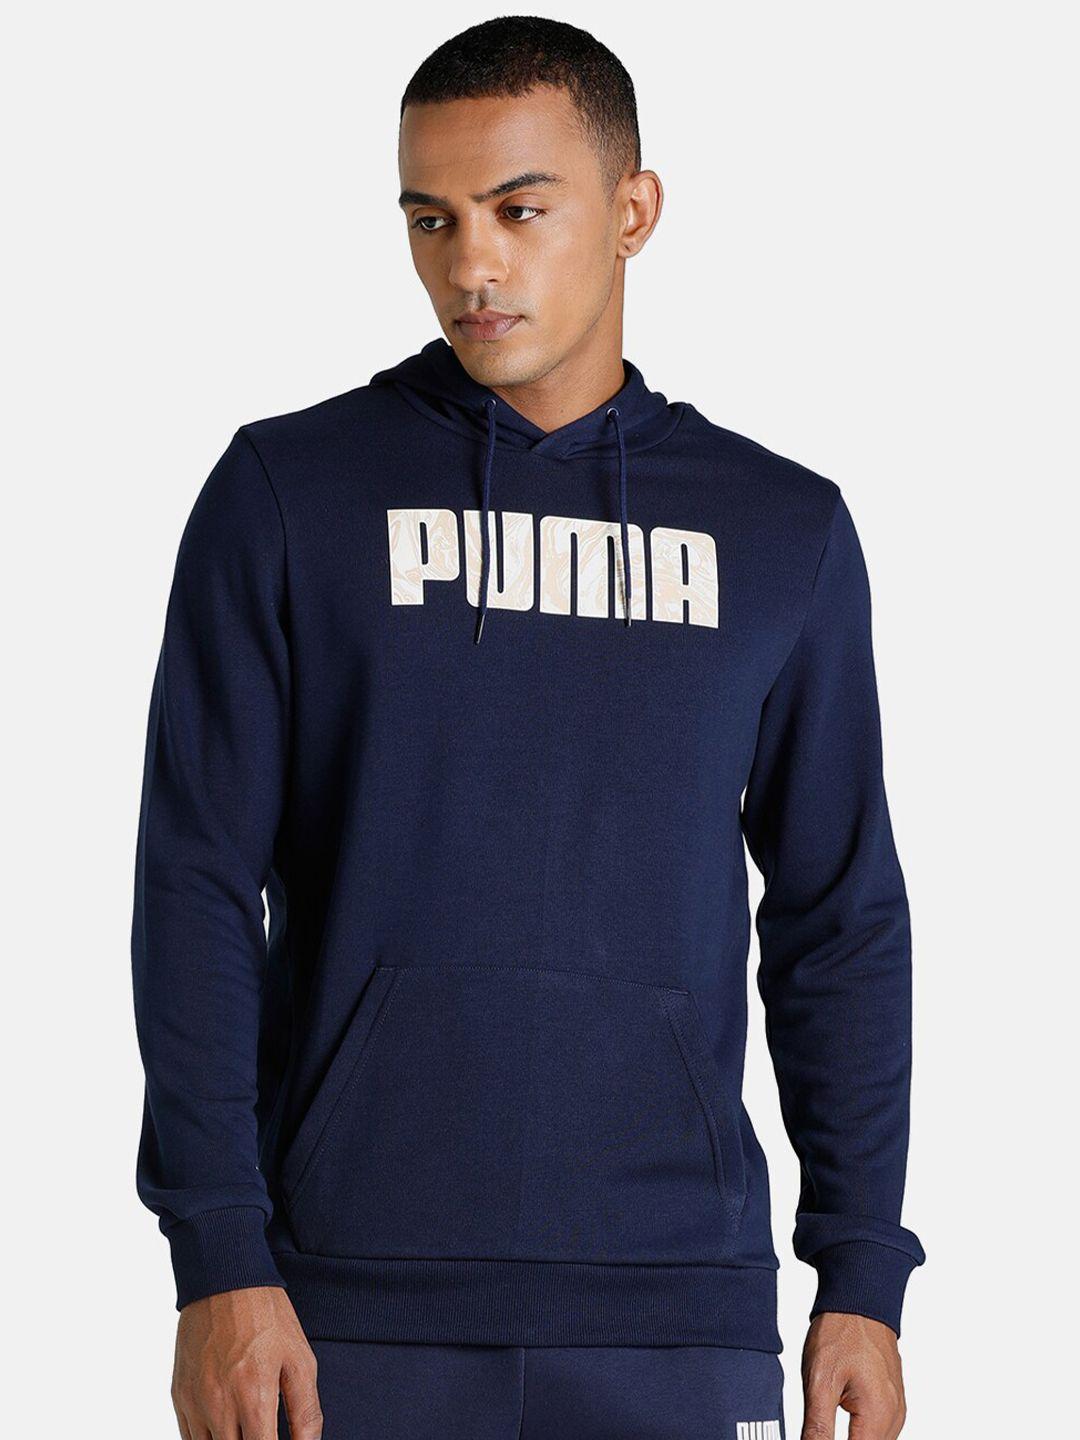 puma-men-blue-&-white-brand-logo-printed-hooded-cotton-sweatshirt